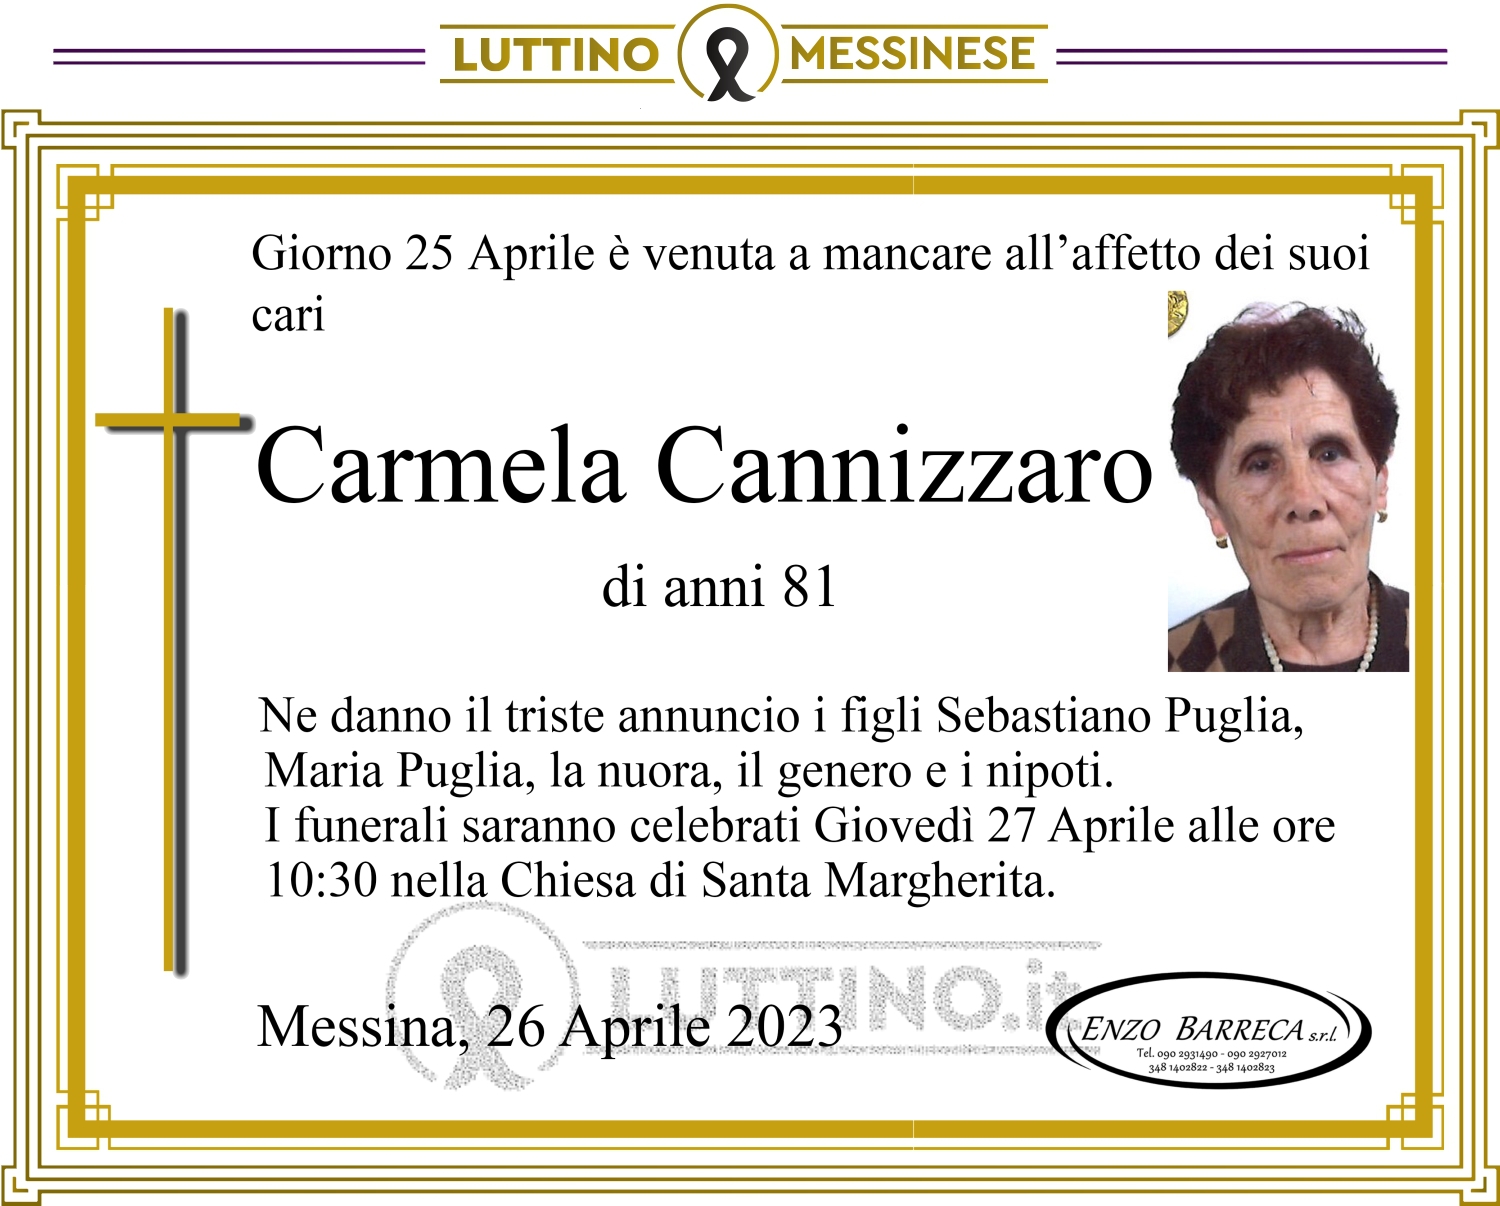 Carmela Cannizzaro